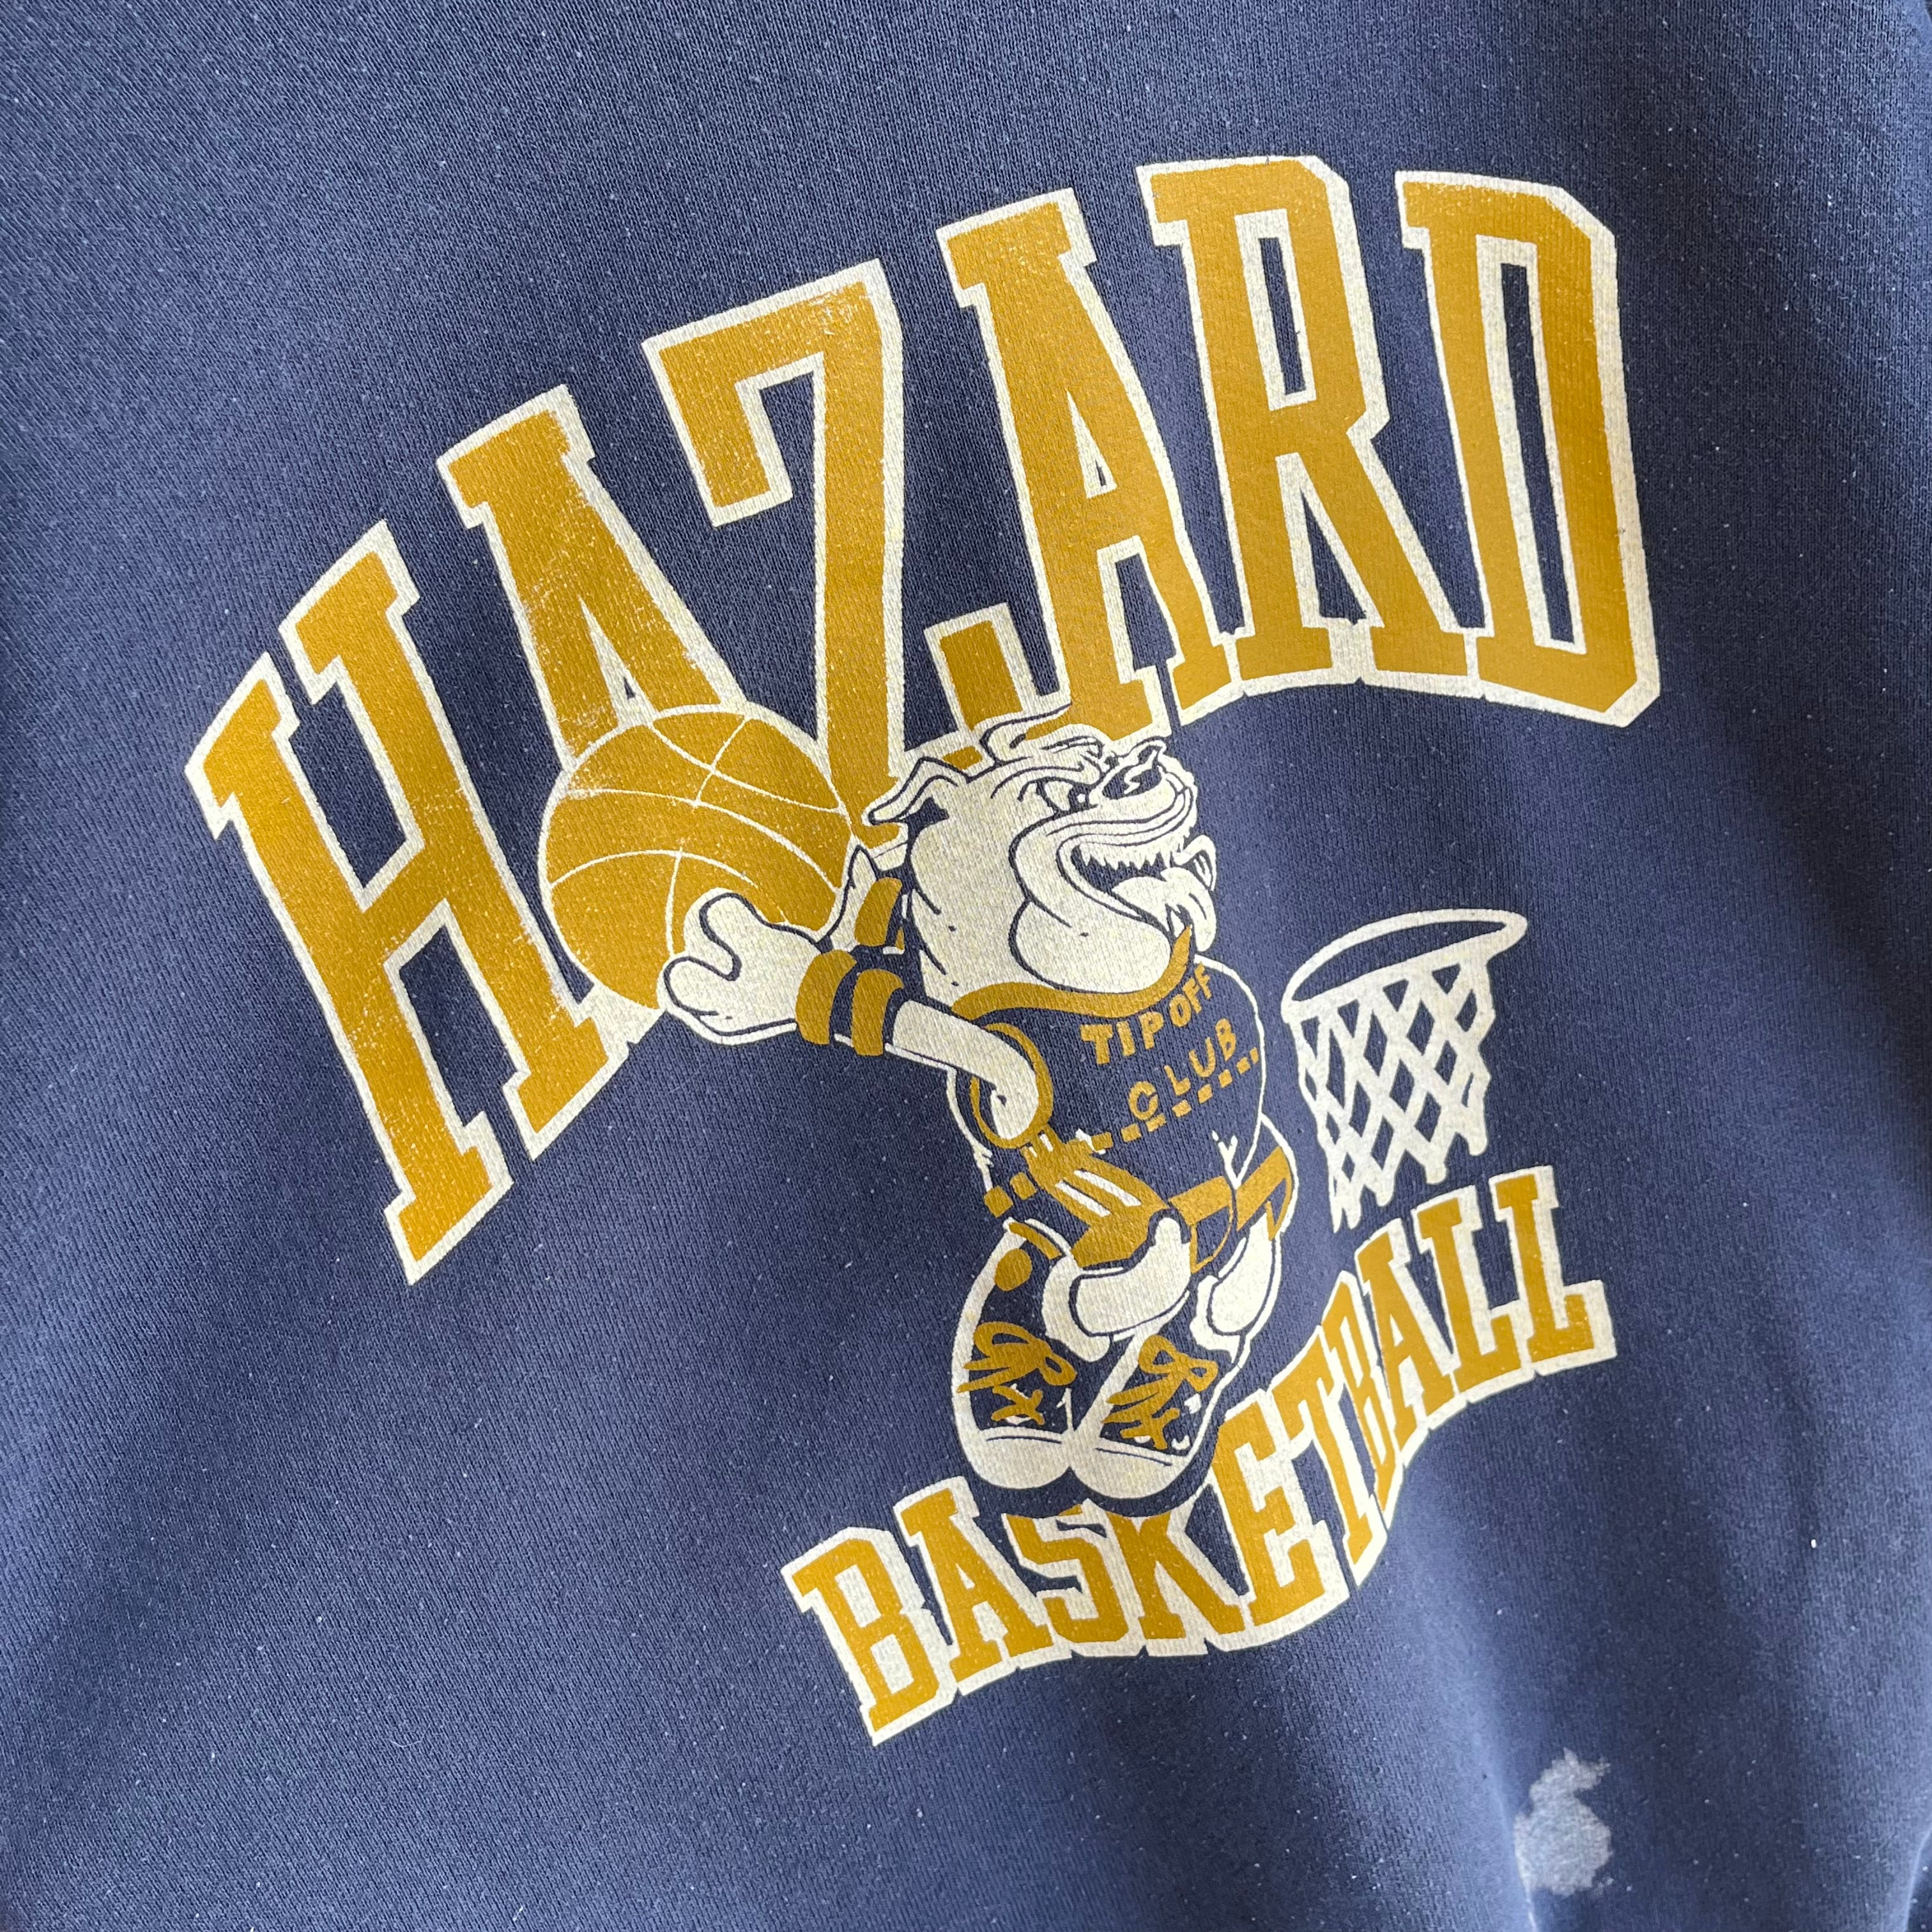 1980s Hazard Bulldogs Basketball Sweatshirt by FOTL - Stained